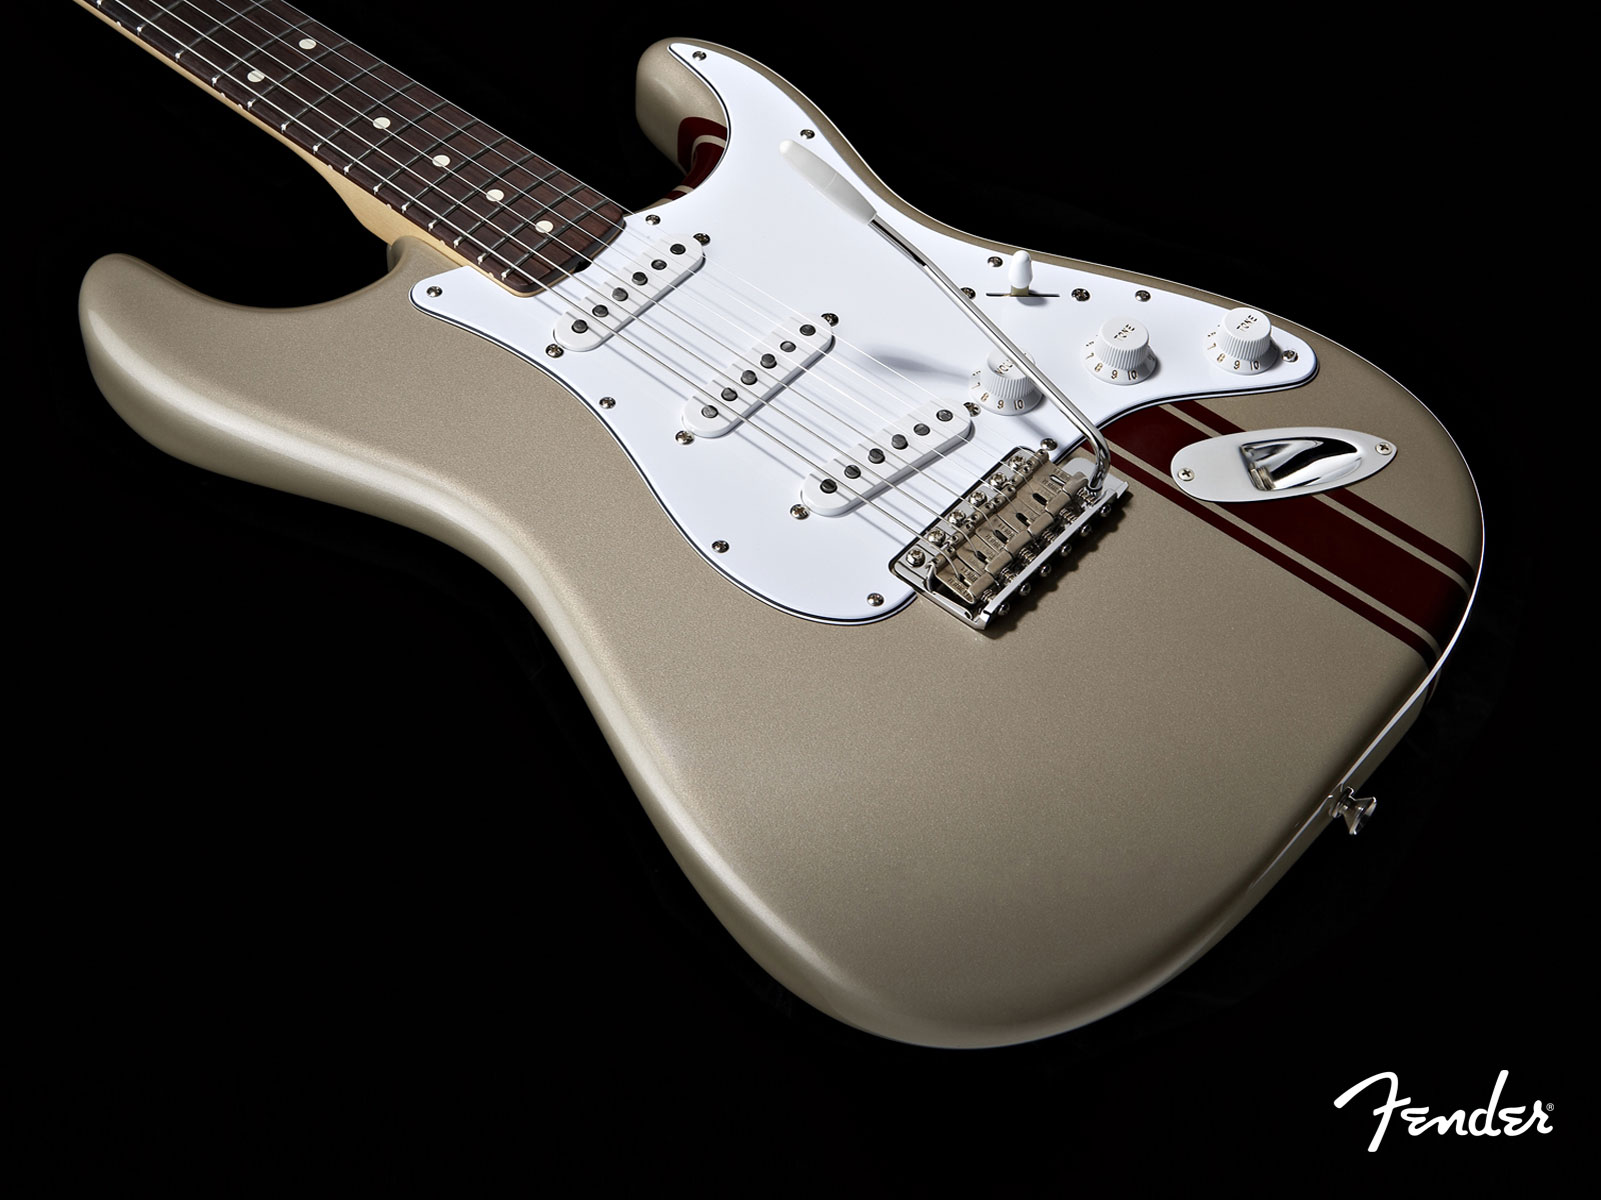 Fender Stratocaster Wallpaper By Cmdry72 On deviantART